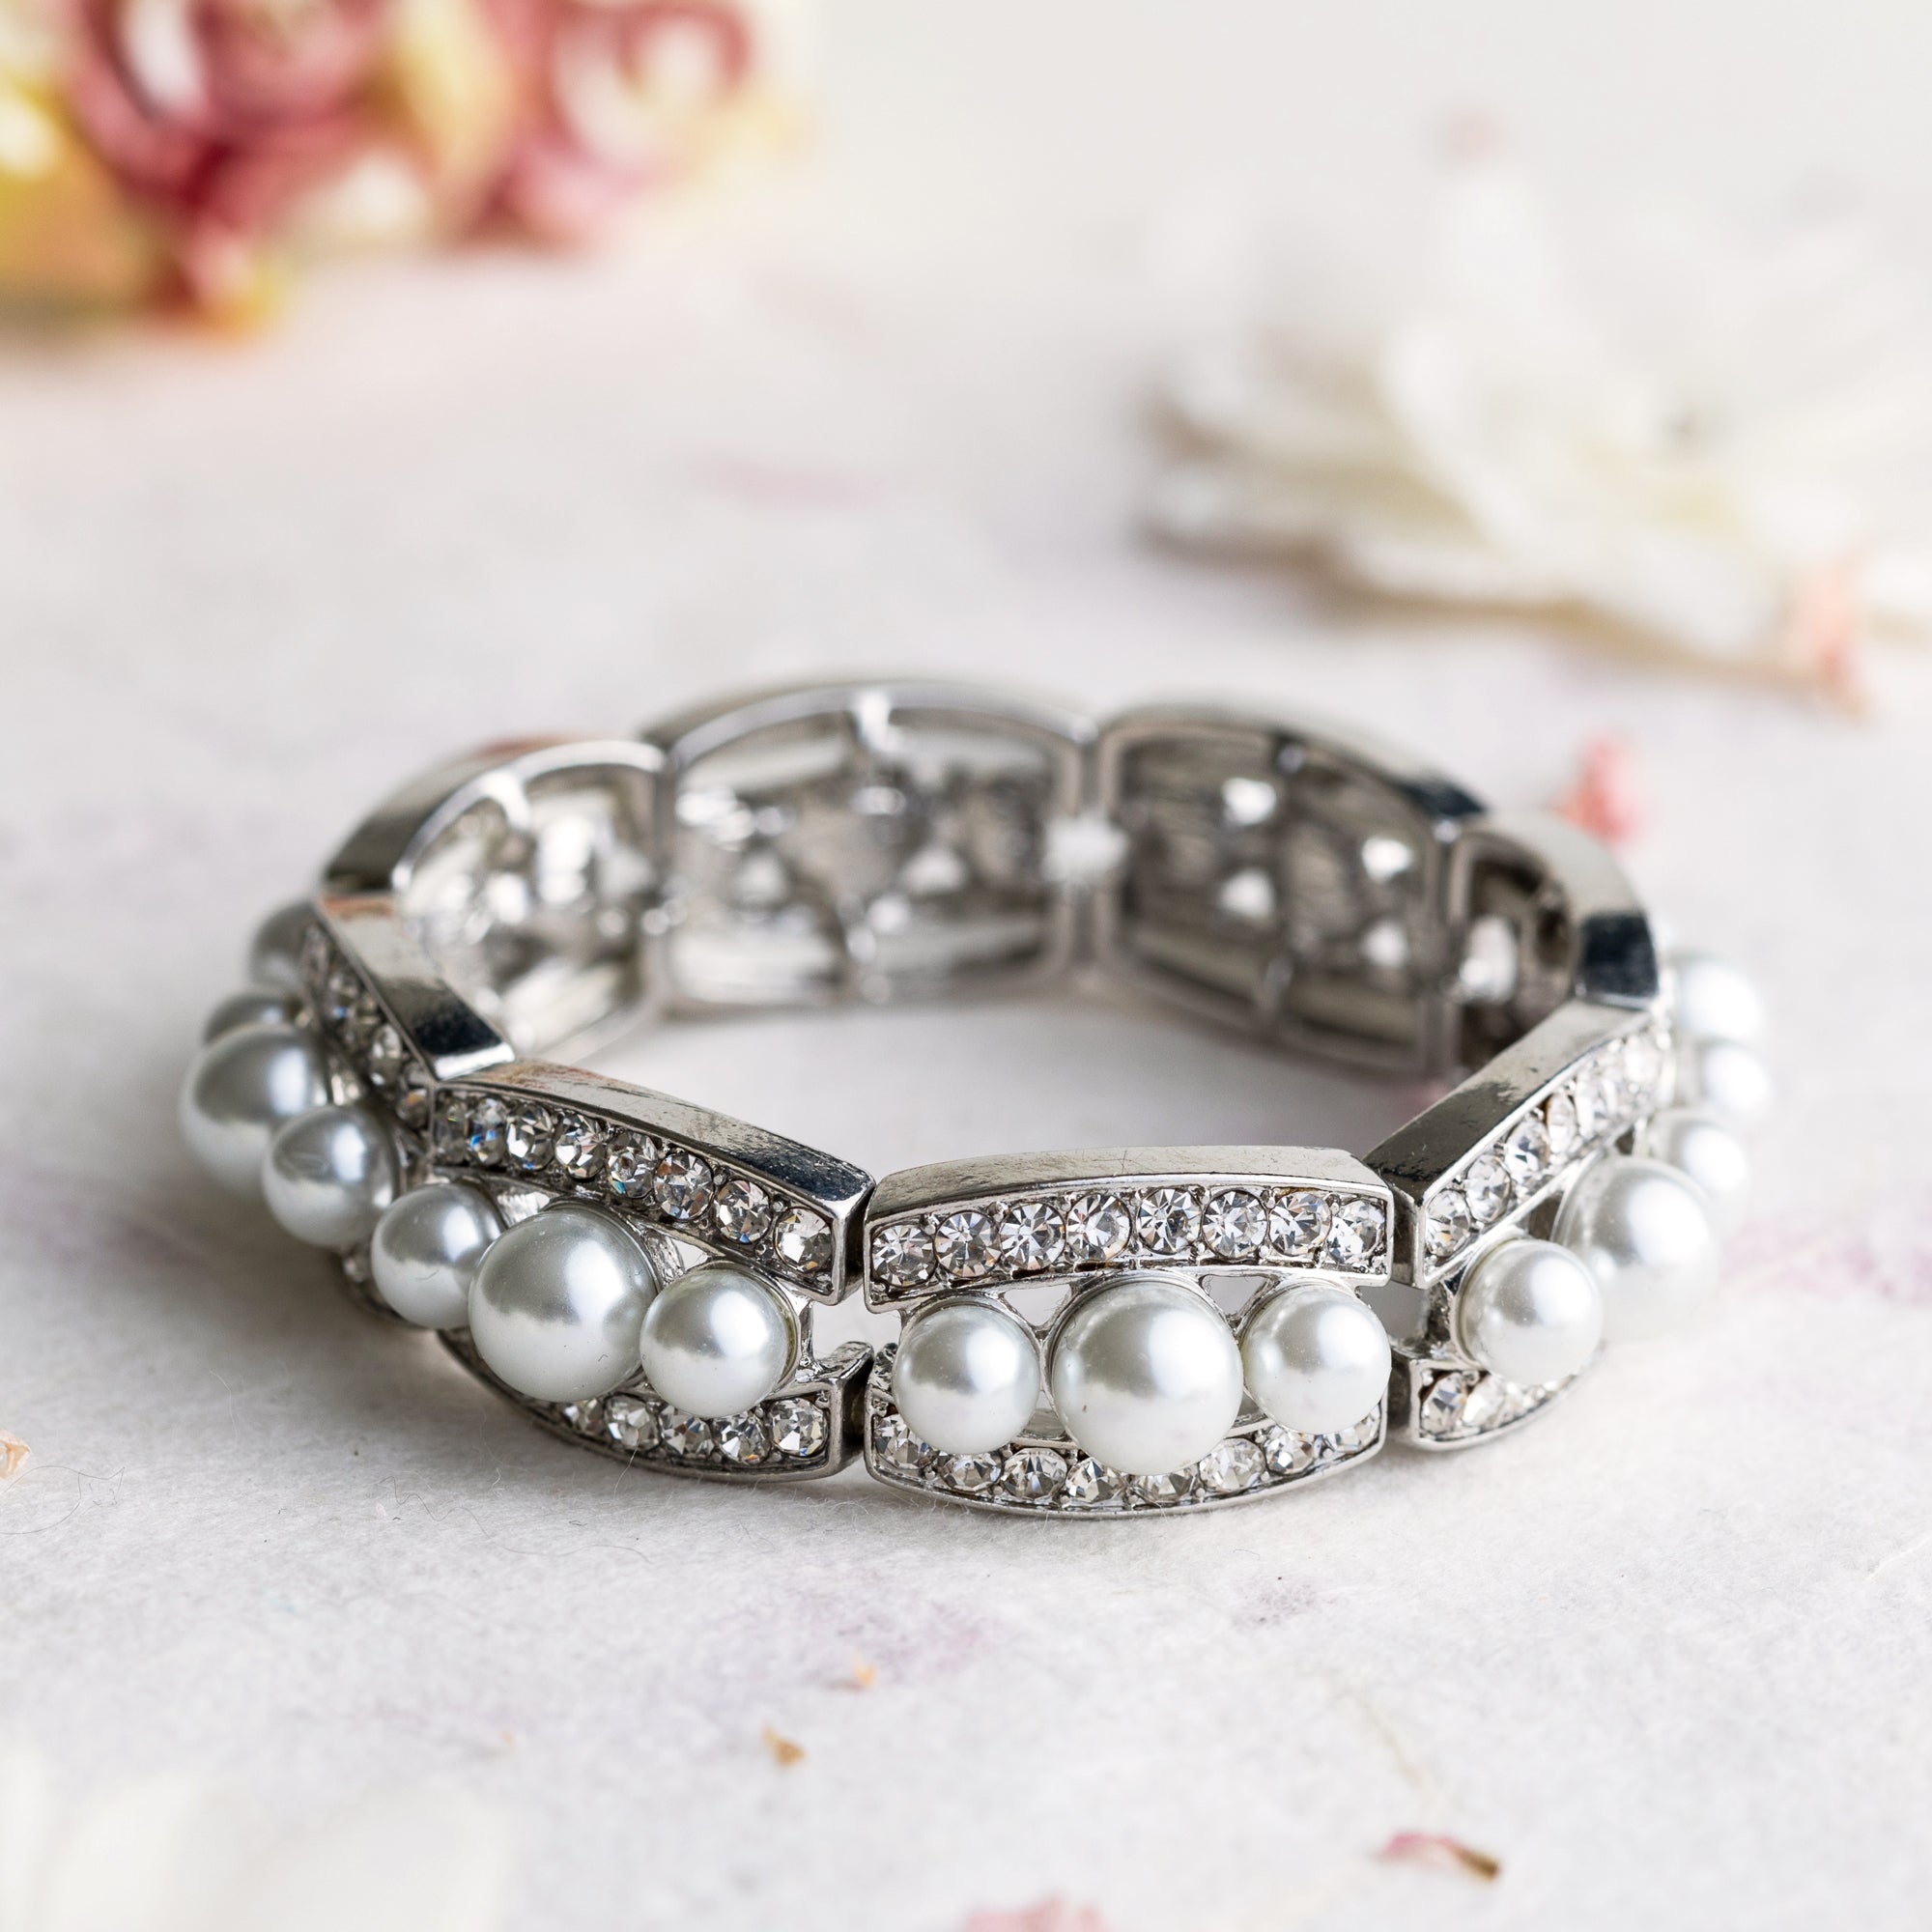 Isla pearl and crystal bracelet